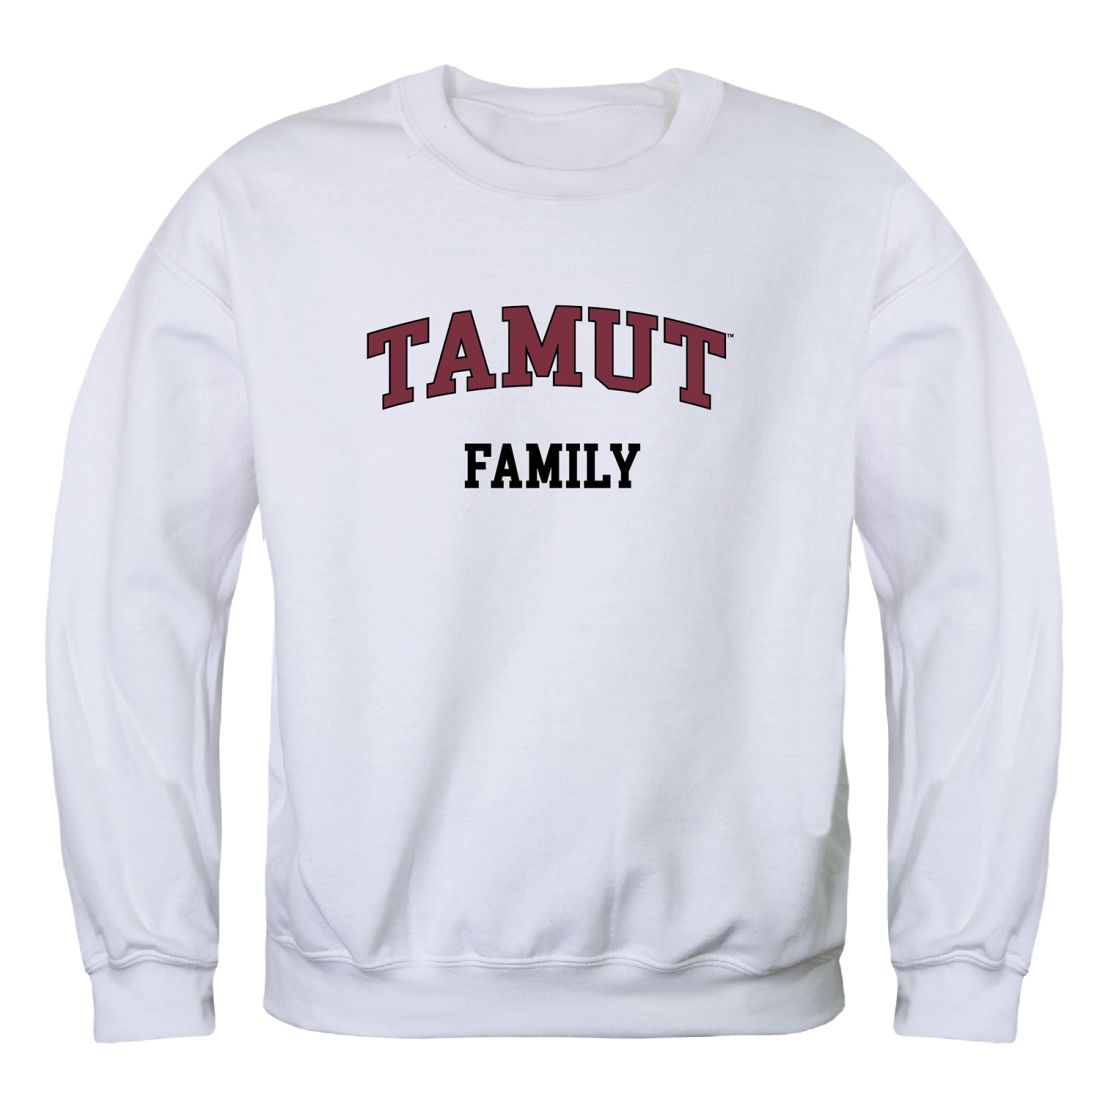 Texas-A&M-University-Texarkana-Eagles-Family-Fleece-Crewneck-Pullover-Sweatshirt